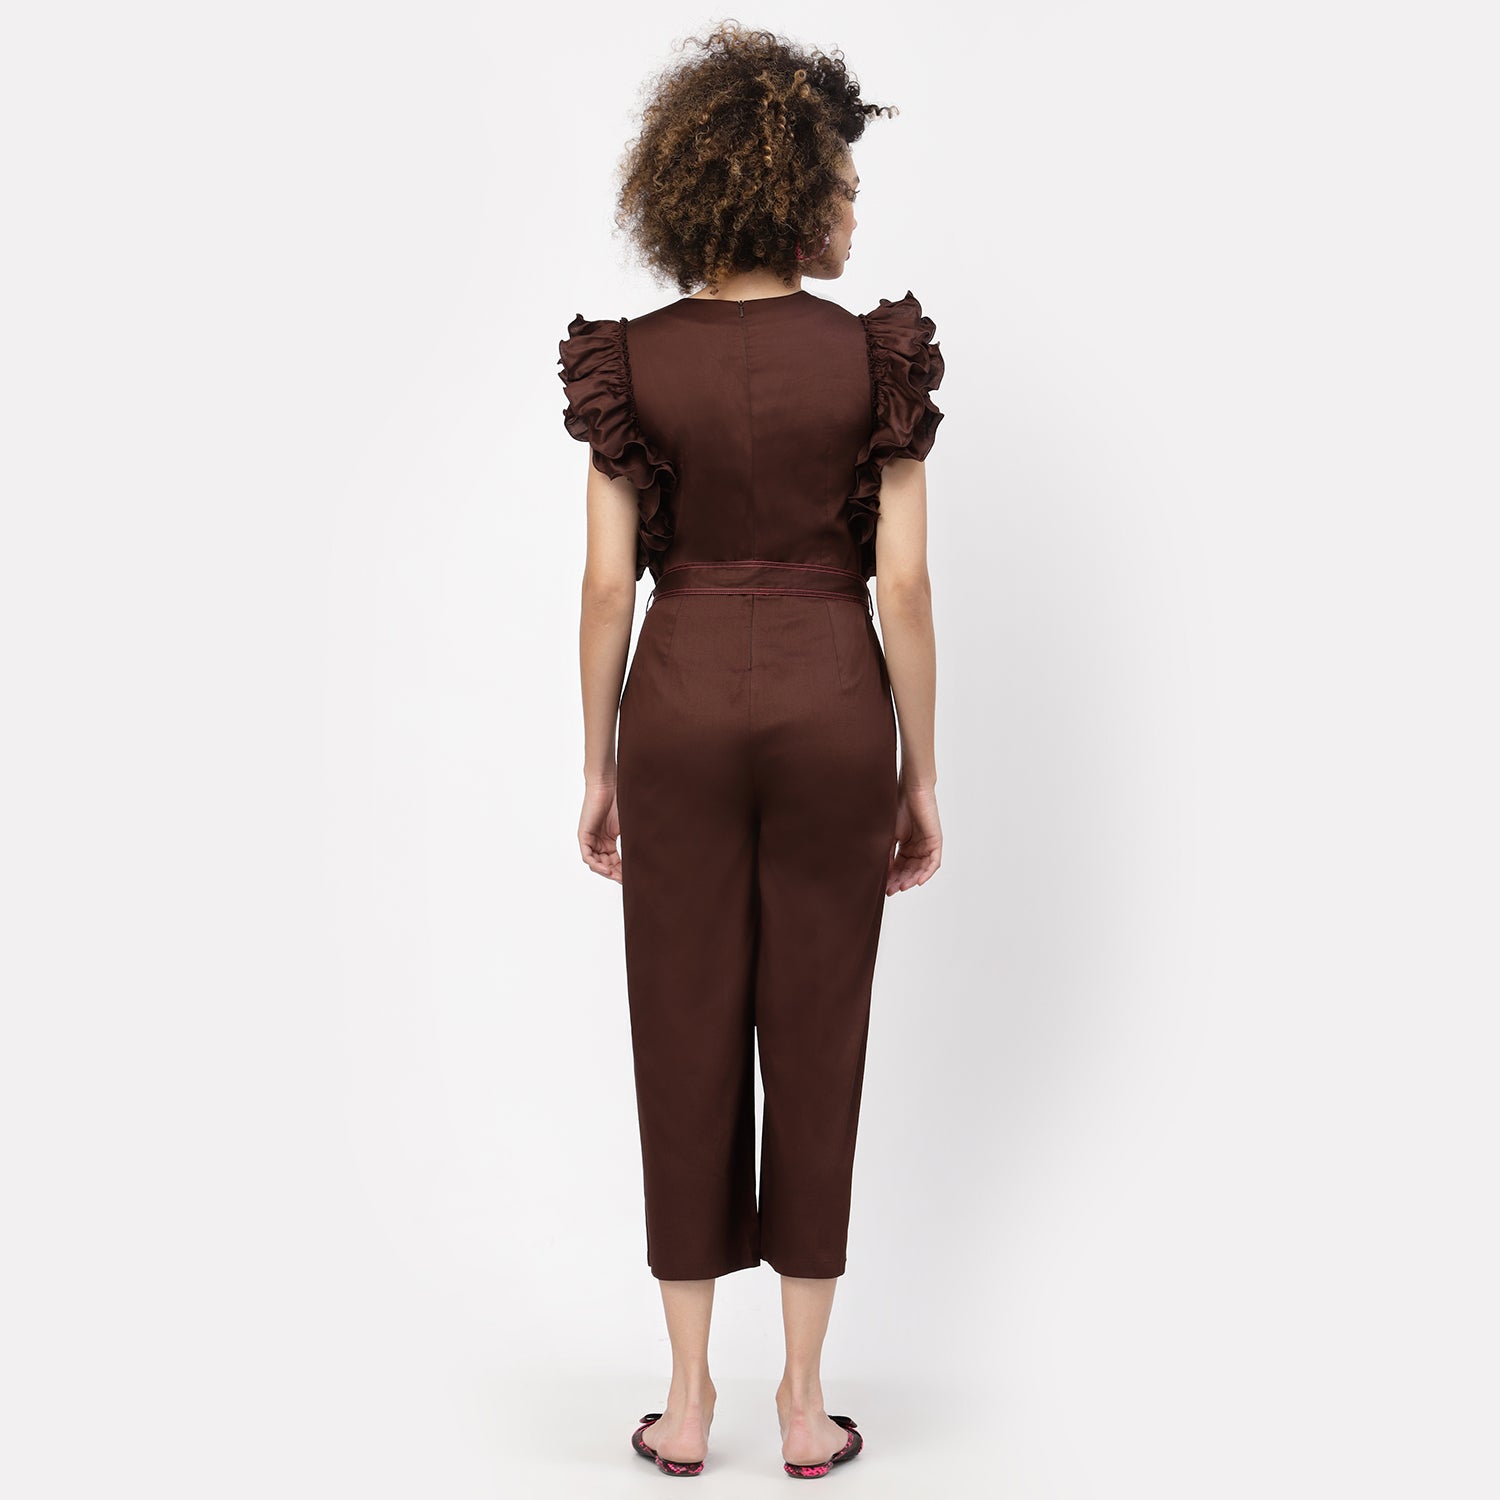 Buy Women Fuchsia Contrast Frill Jumpsuit Online at Sassafras